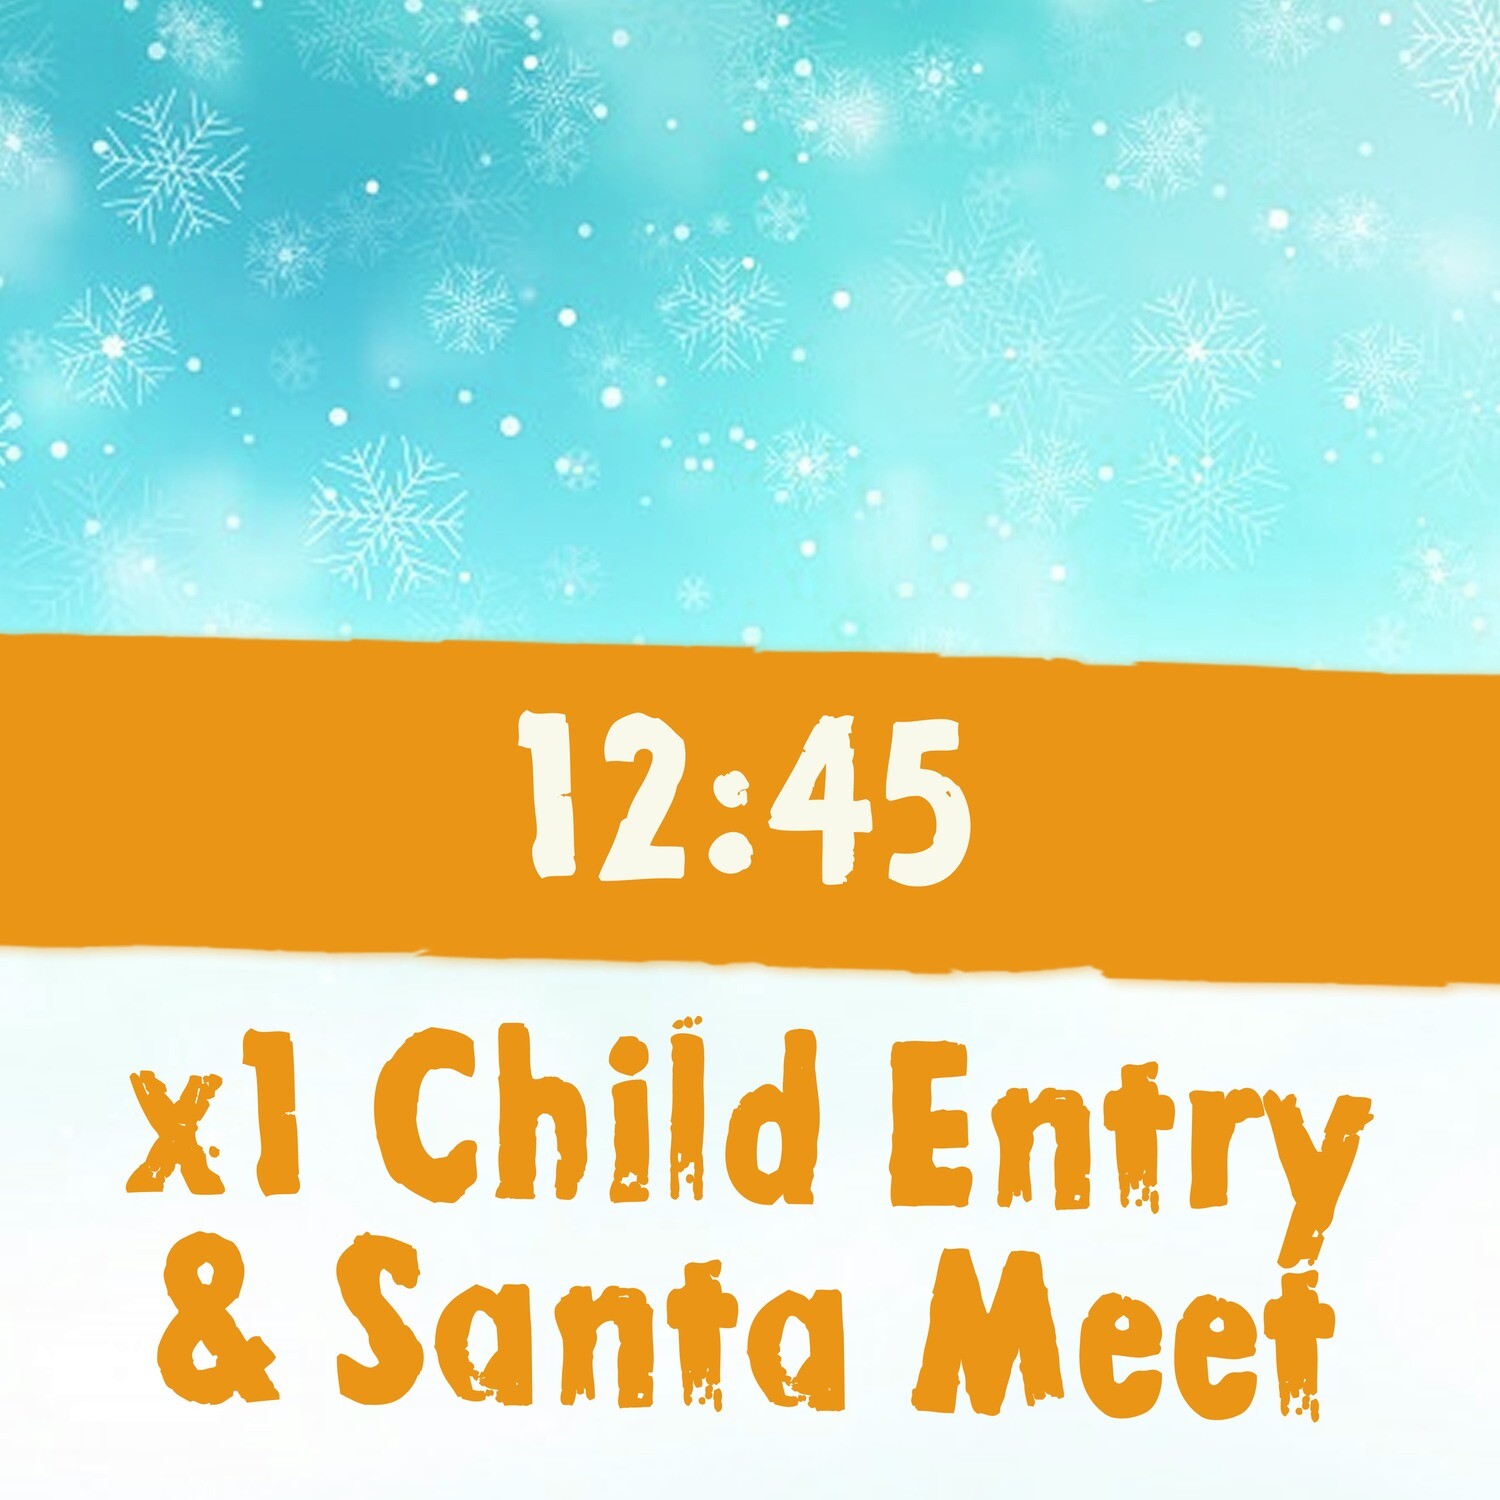 x1 Child Admission + Santa Meet 22nd Dec / 12:45